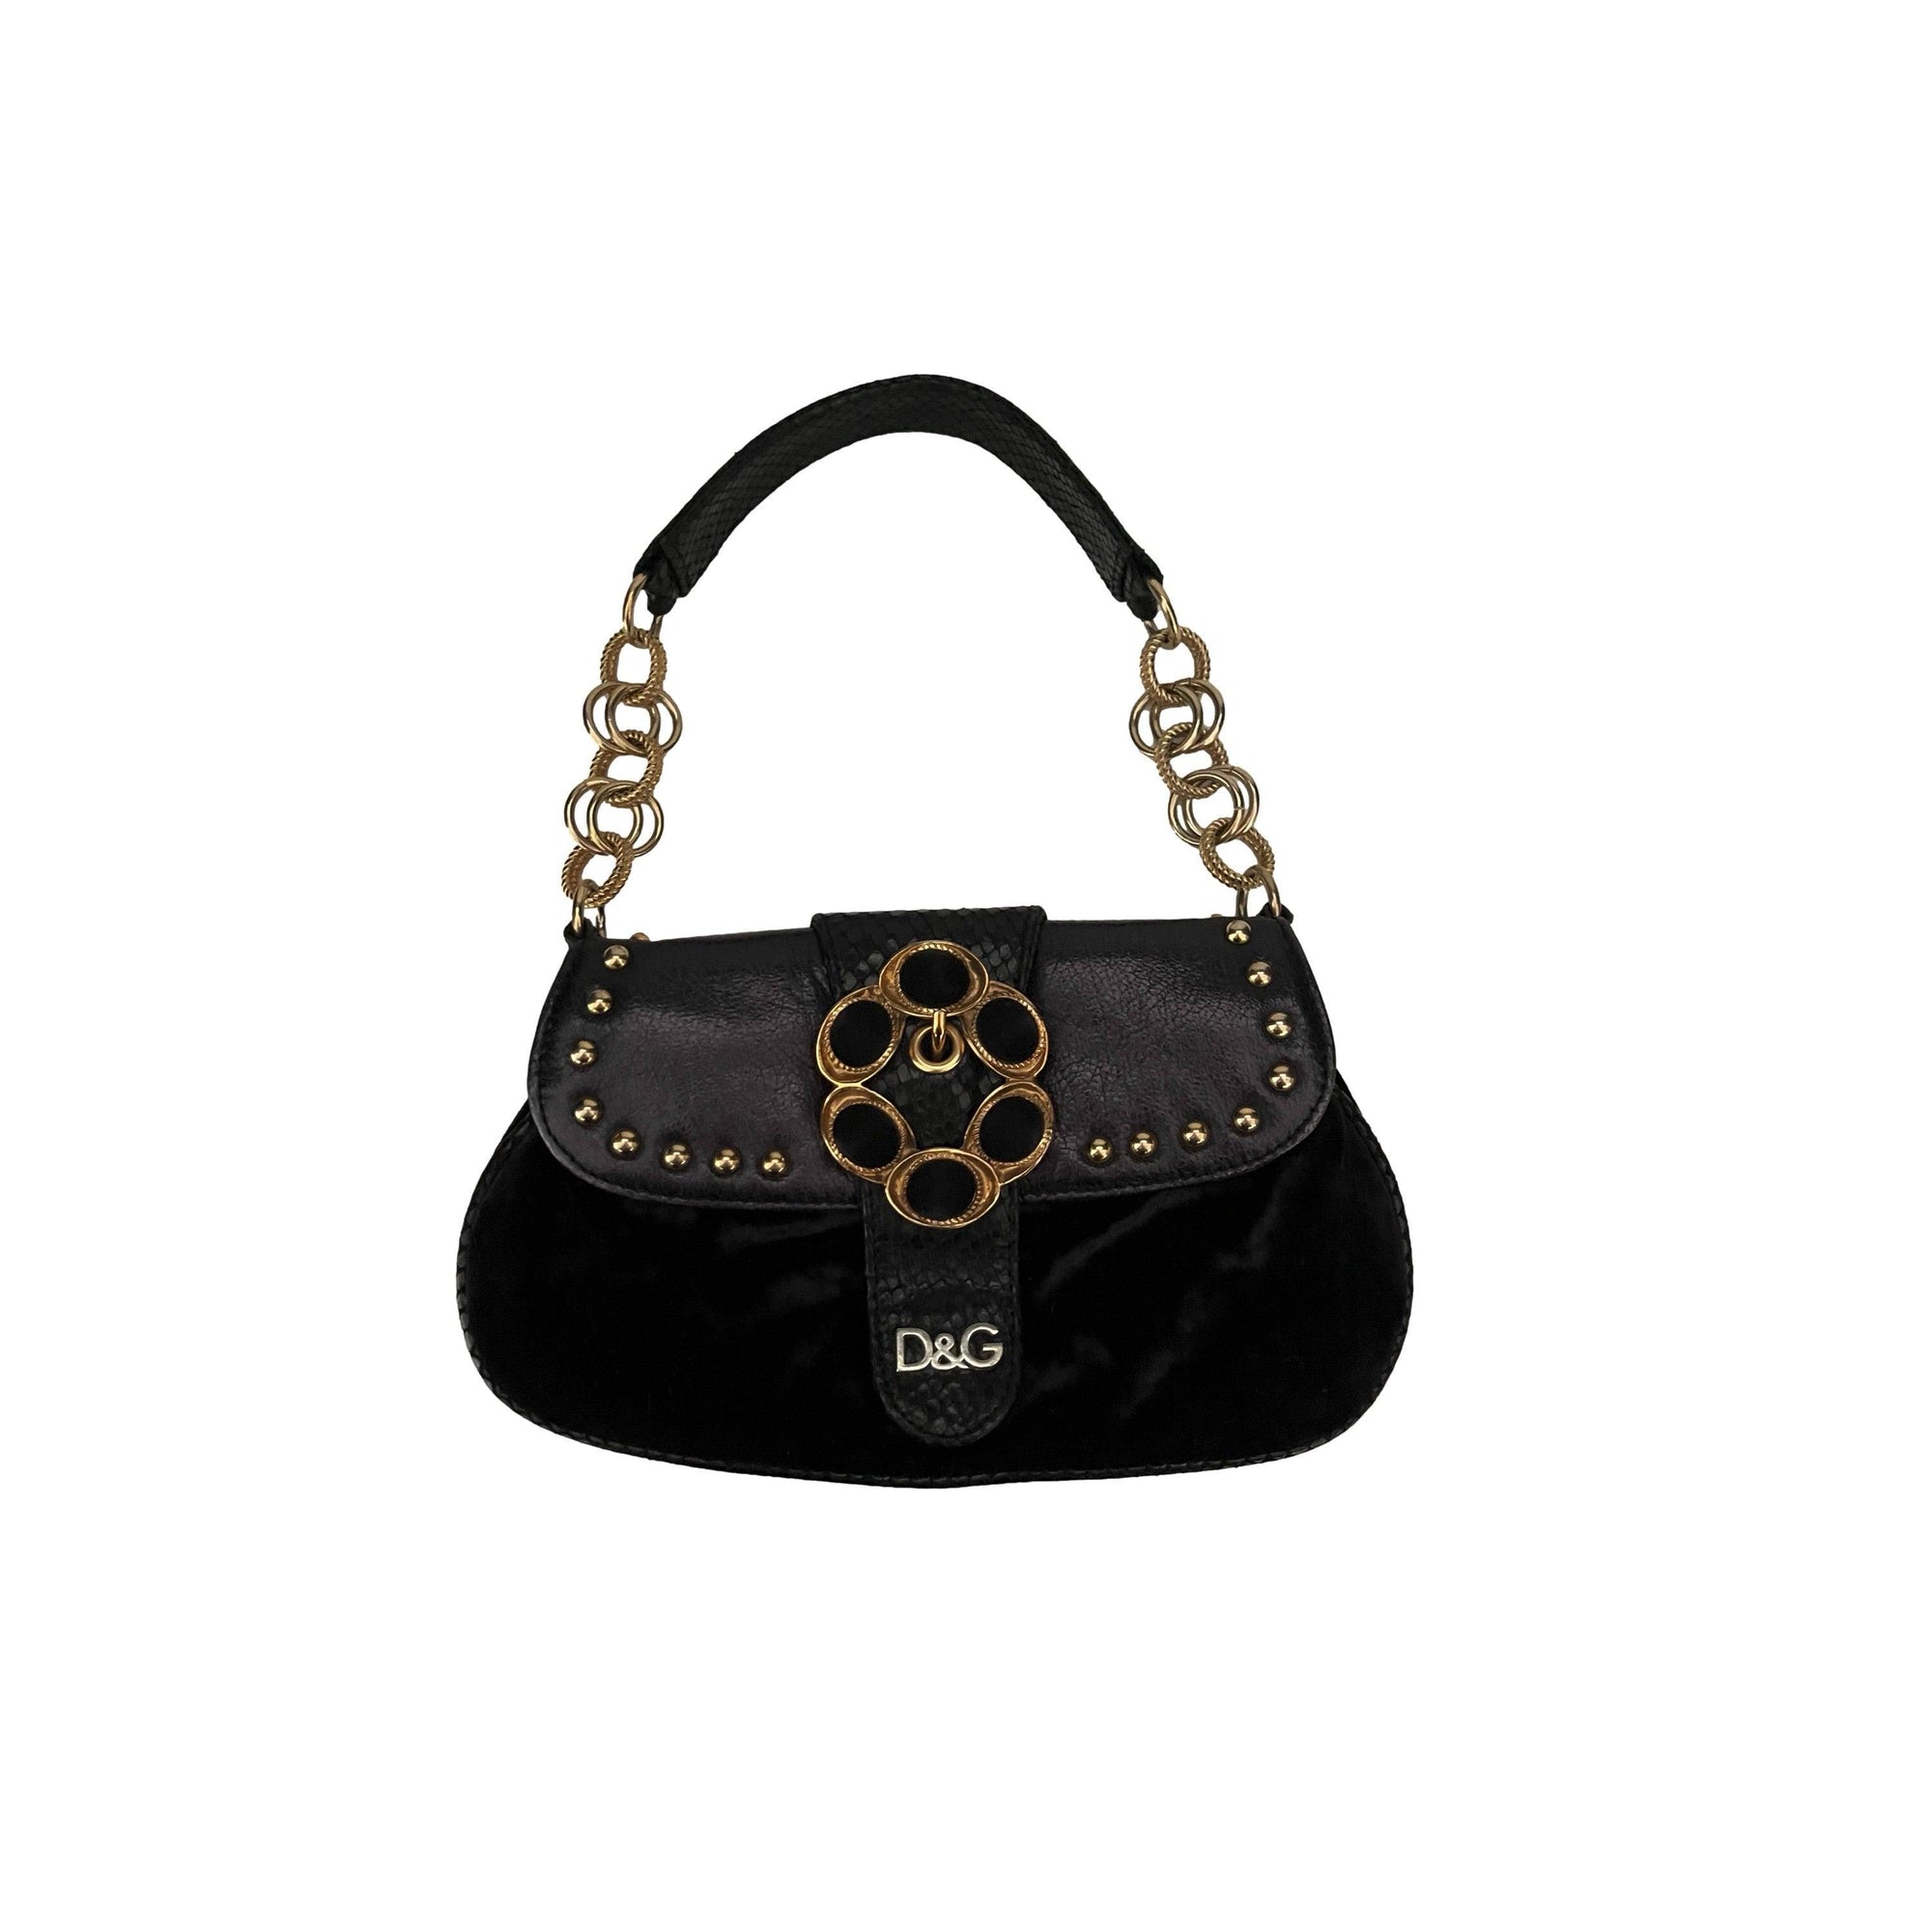 Dolce & Gabbana Black Suede Chain Mini Bag - Handbags